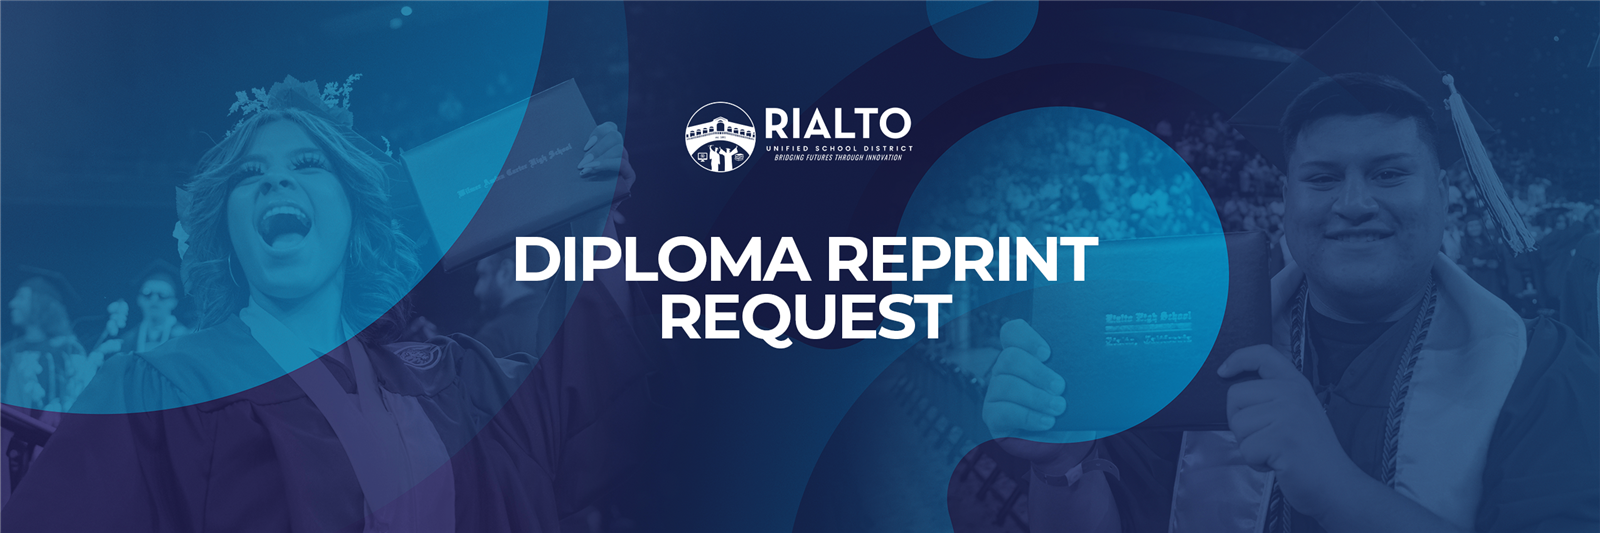 Diploma Reprint Request